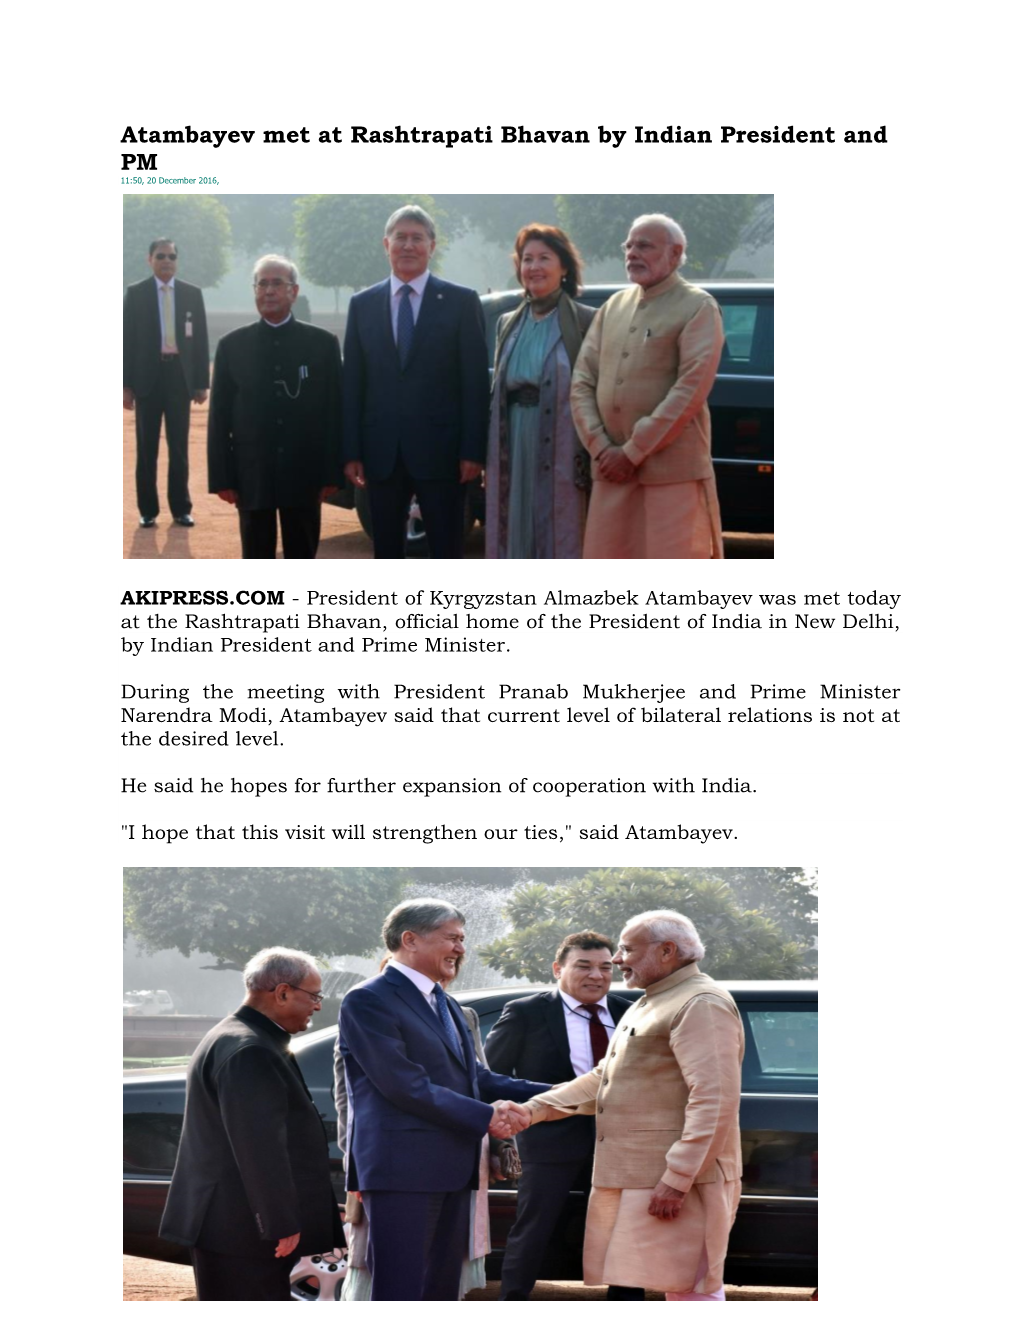 Atambayev Met at Rashtrapati Bhavan by Indian President and PM 11:50, 20 December 2016